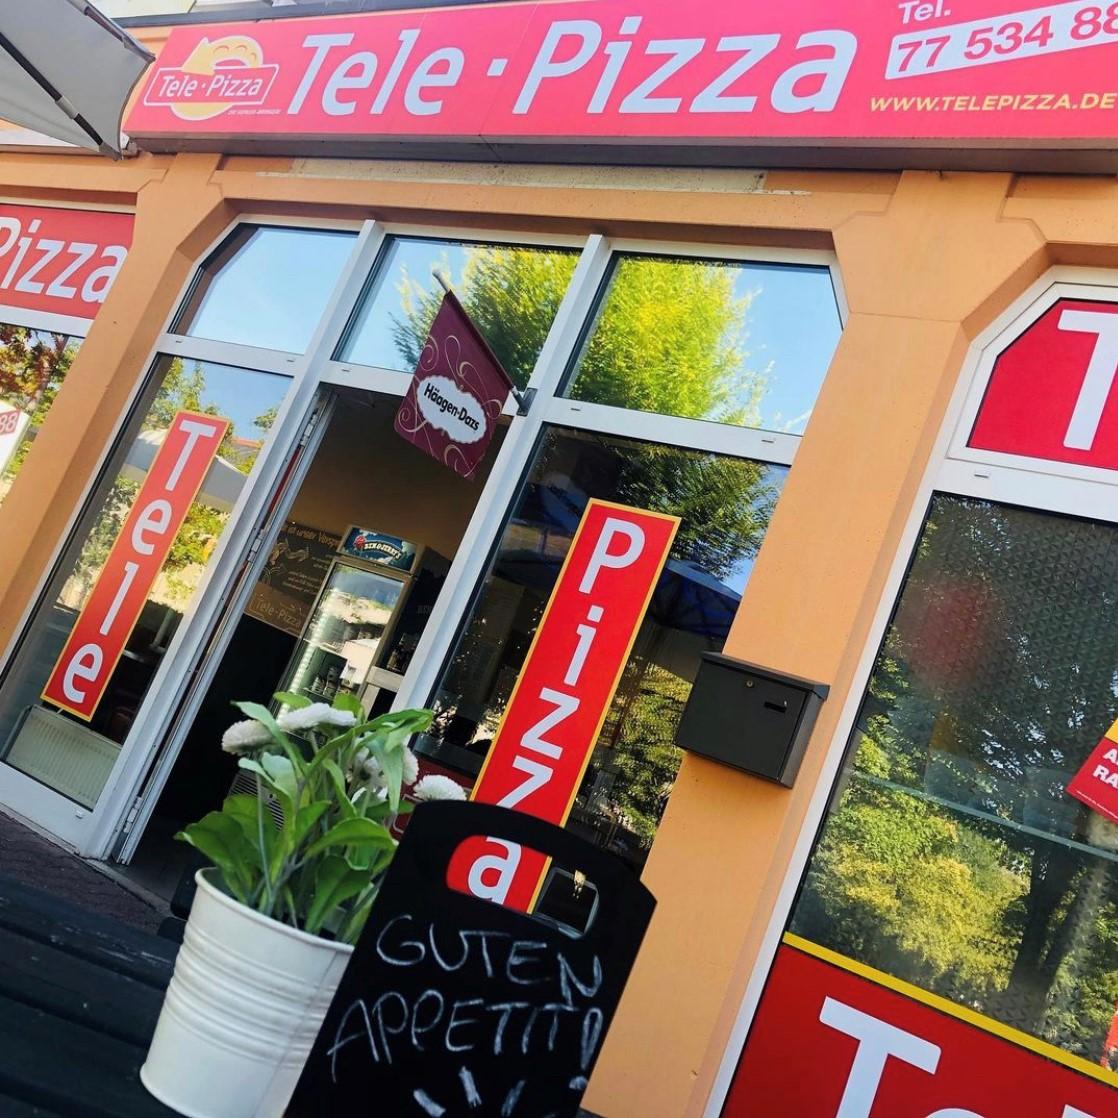 Restaurant "Tele Pizza" in Freiberg